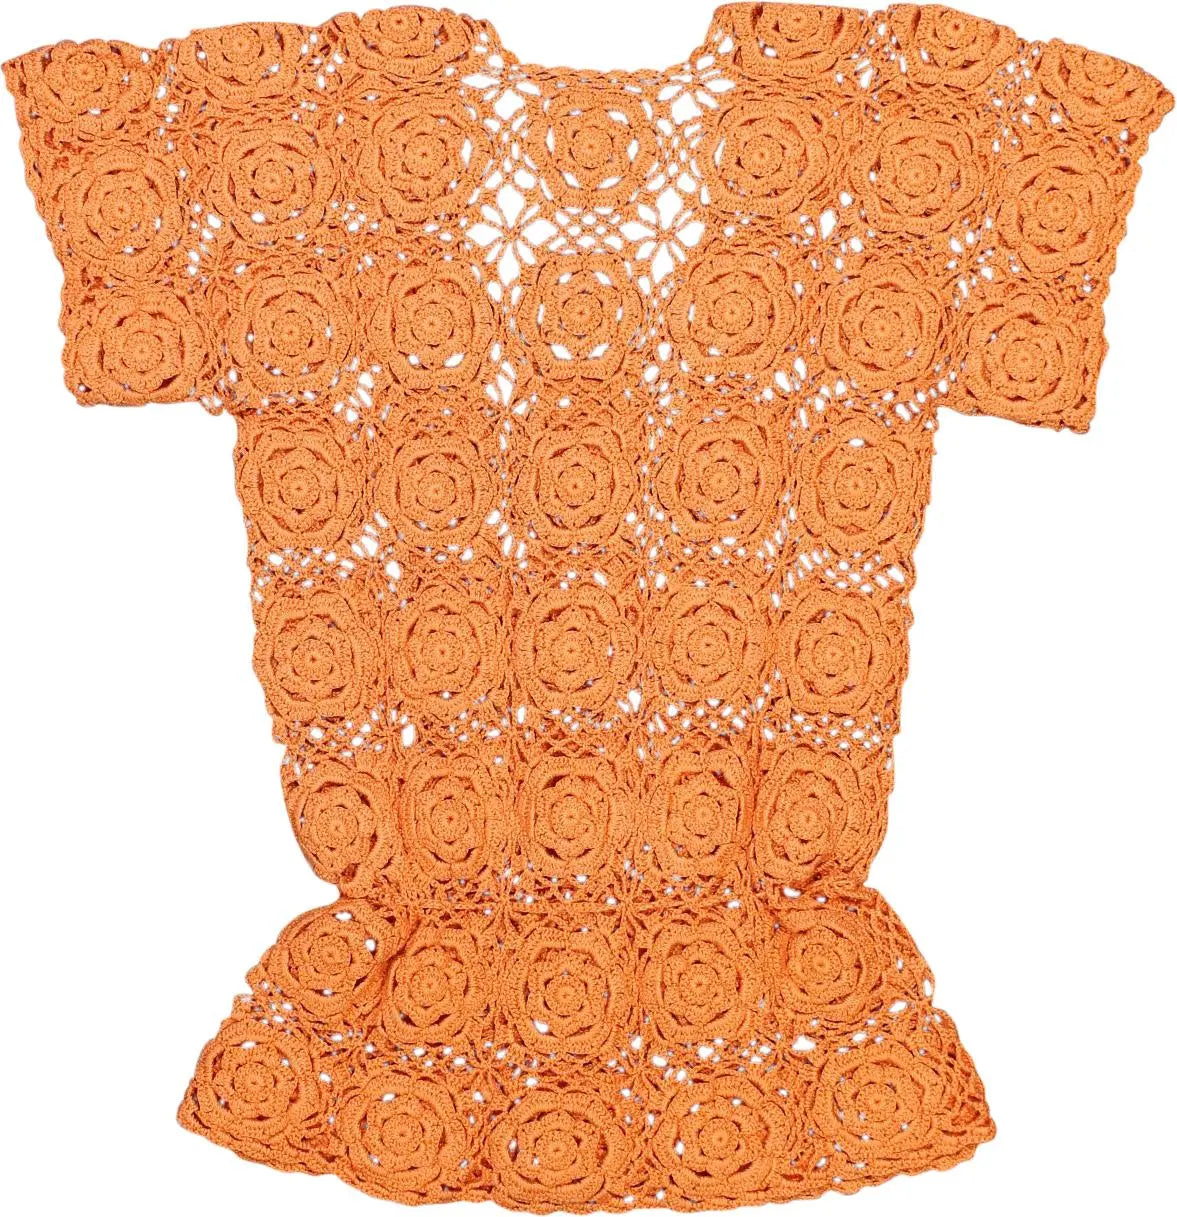 Handmade - Orange Crochet Top- ThriftTale.com - Vintage and second handclothing